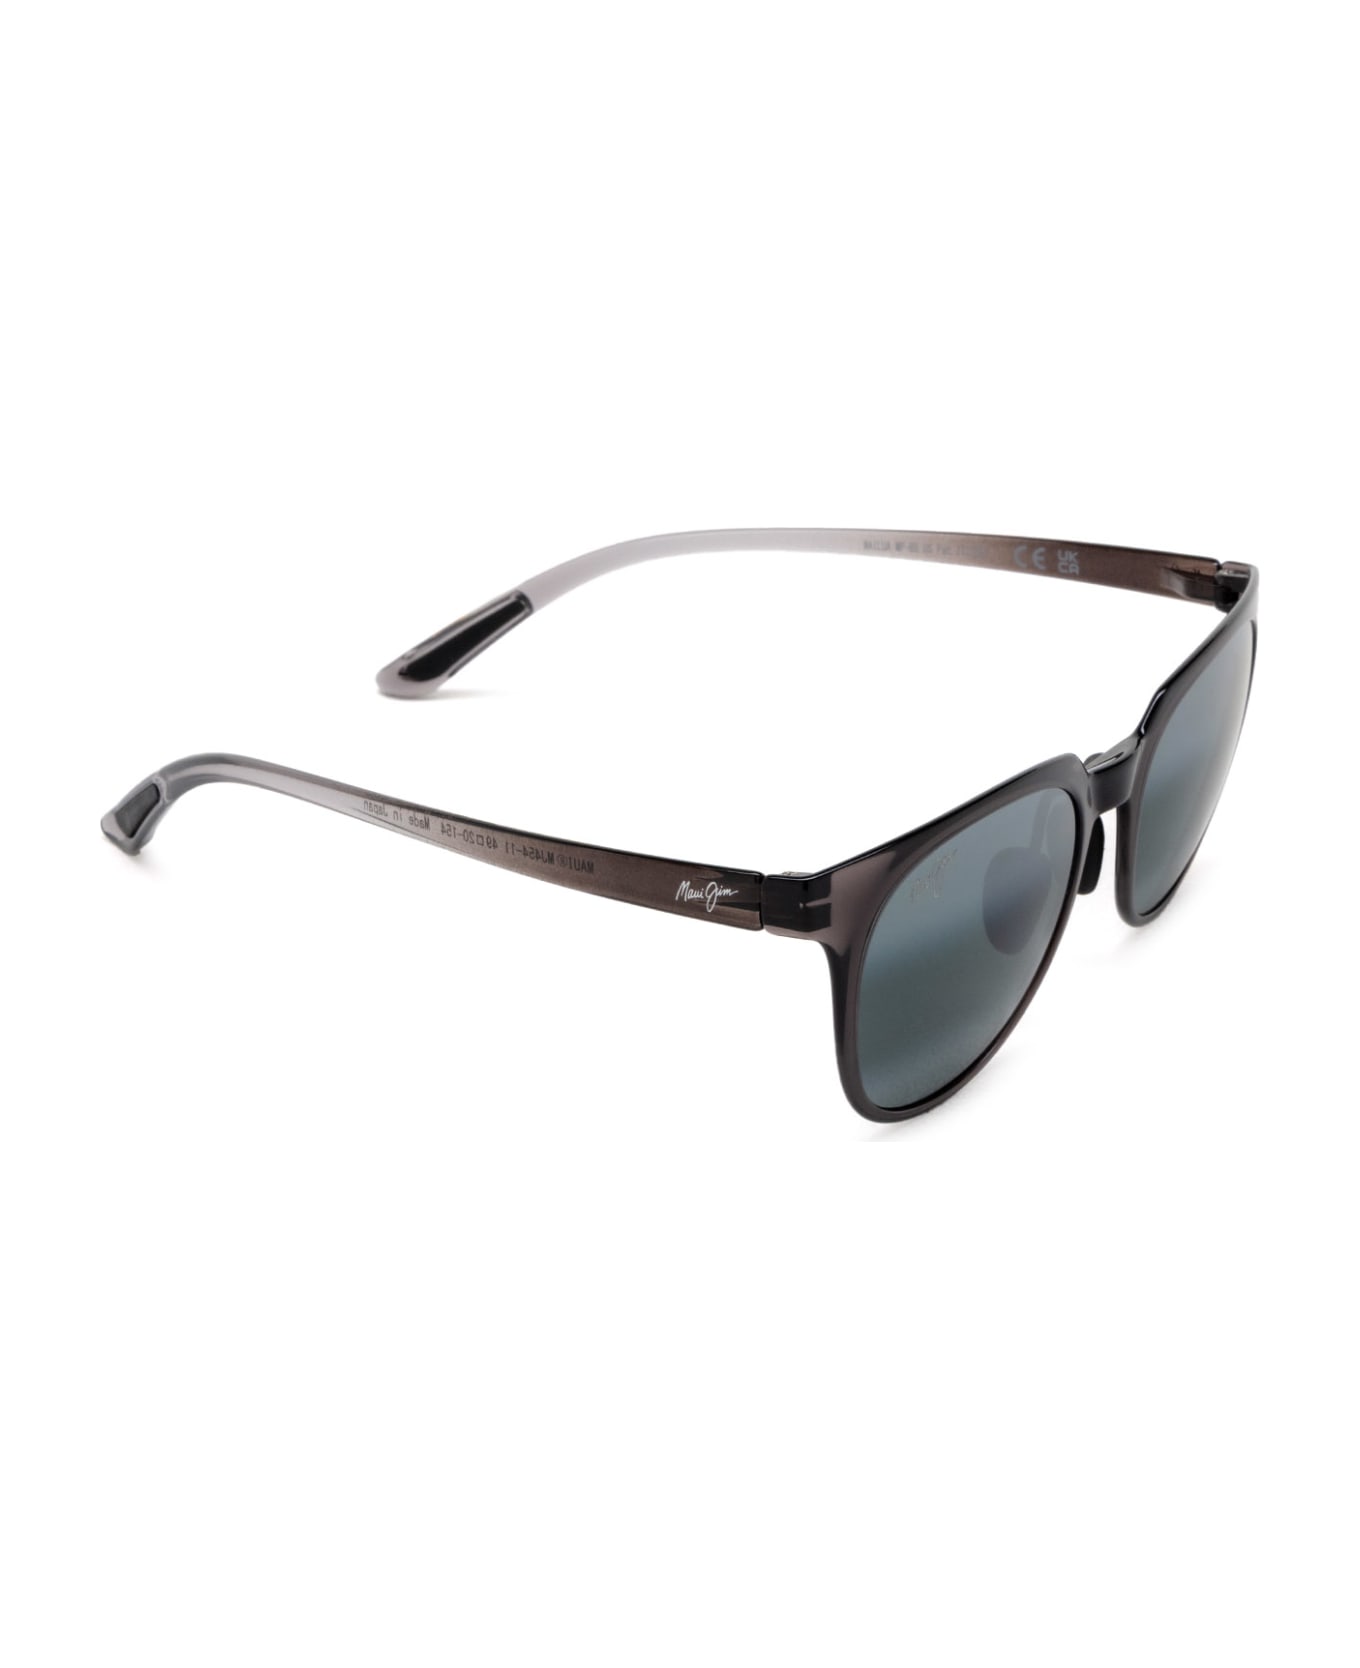 Maui Jim Mj454 Translucent Grey Sunglasses - Translucent Grey